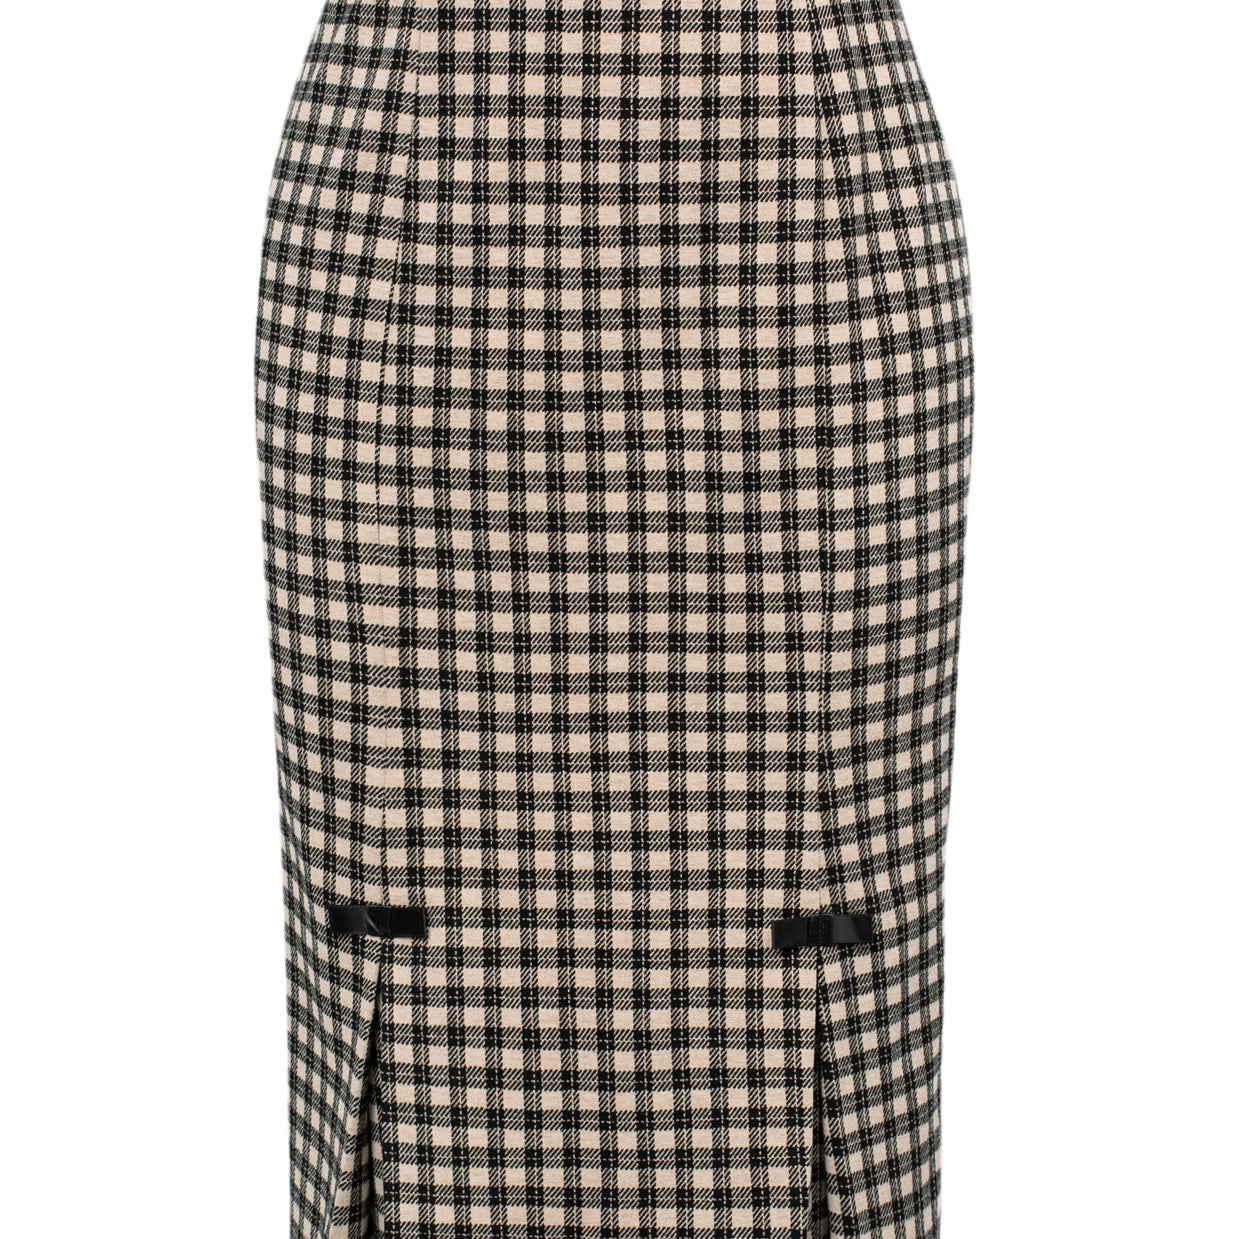 Vintage Plaided Skirts High Waist Below Knee Bodycon Skirt